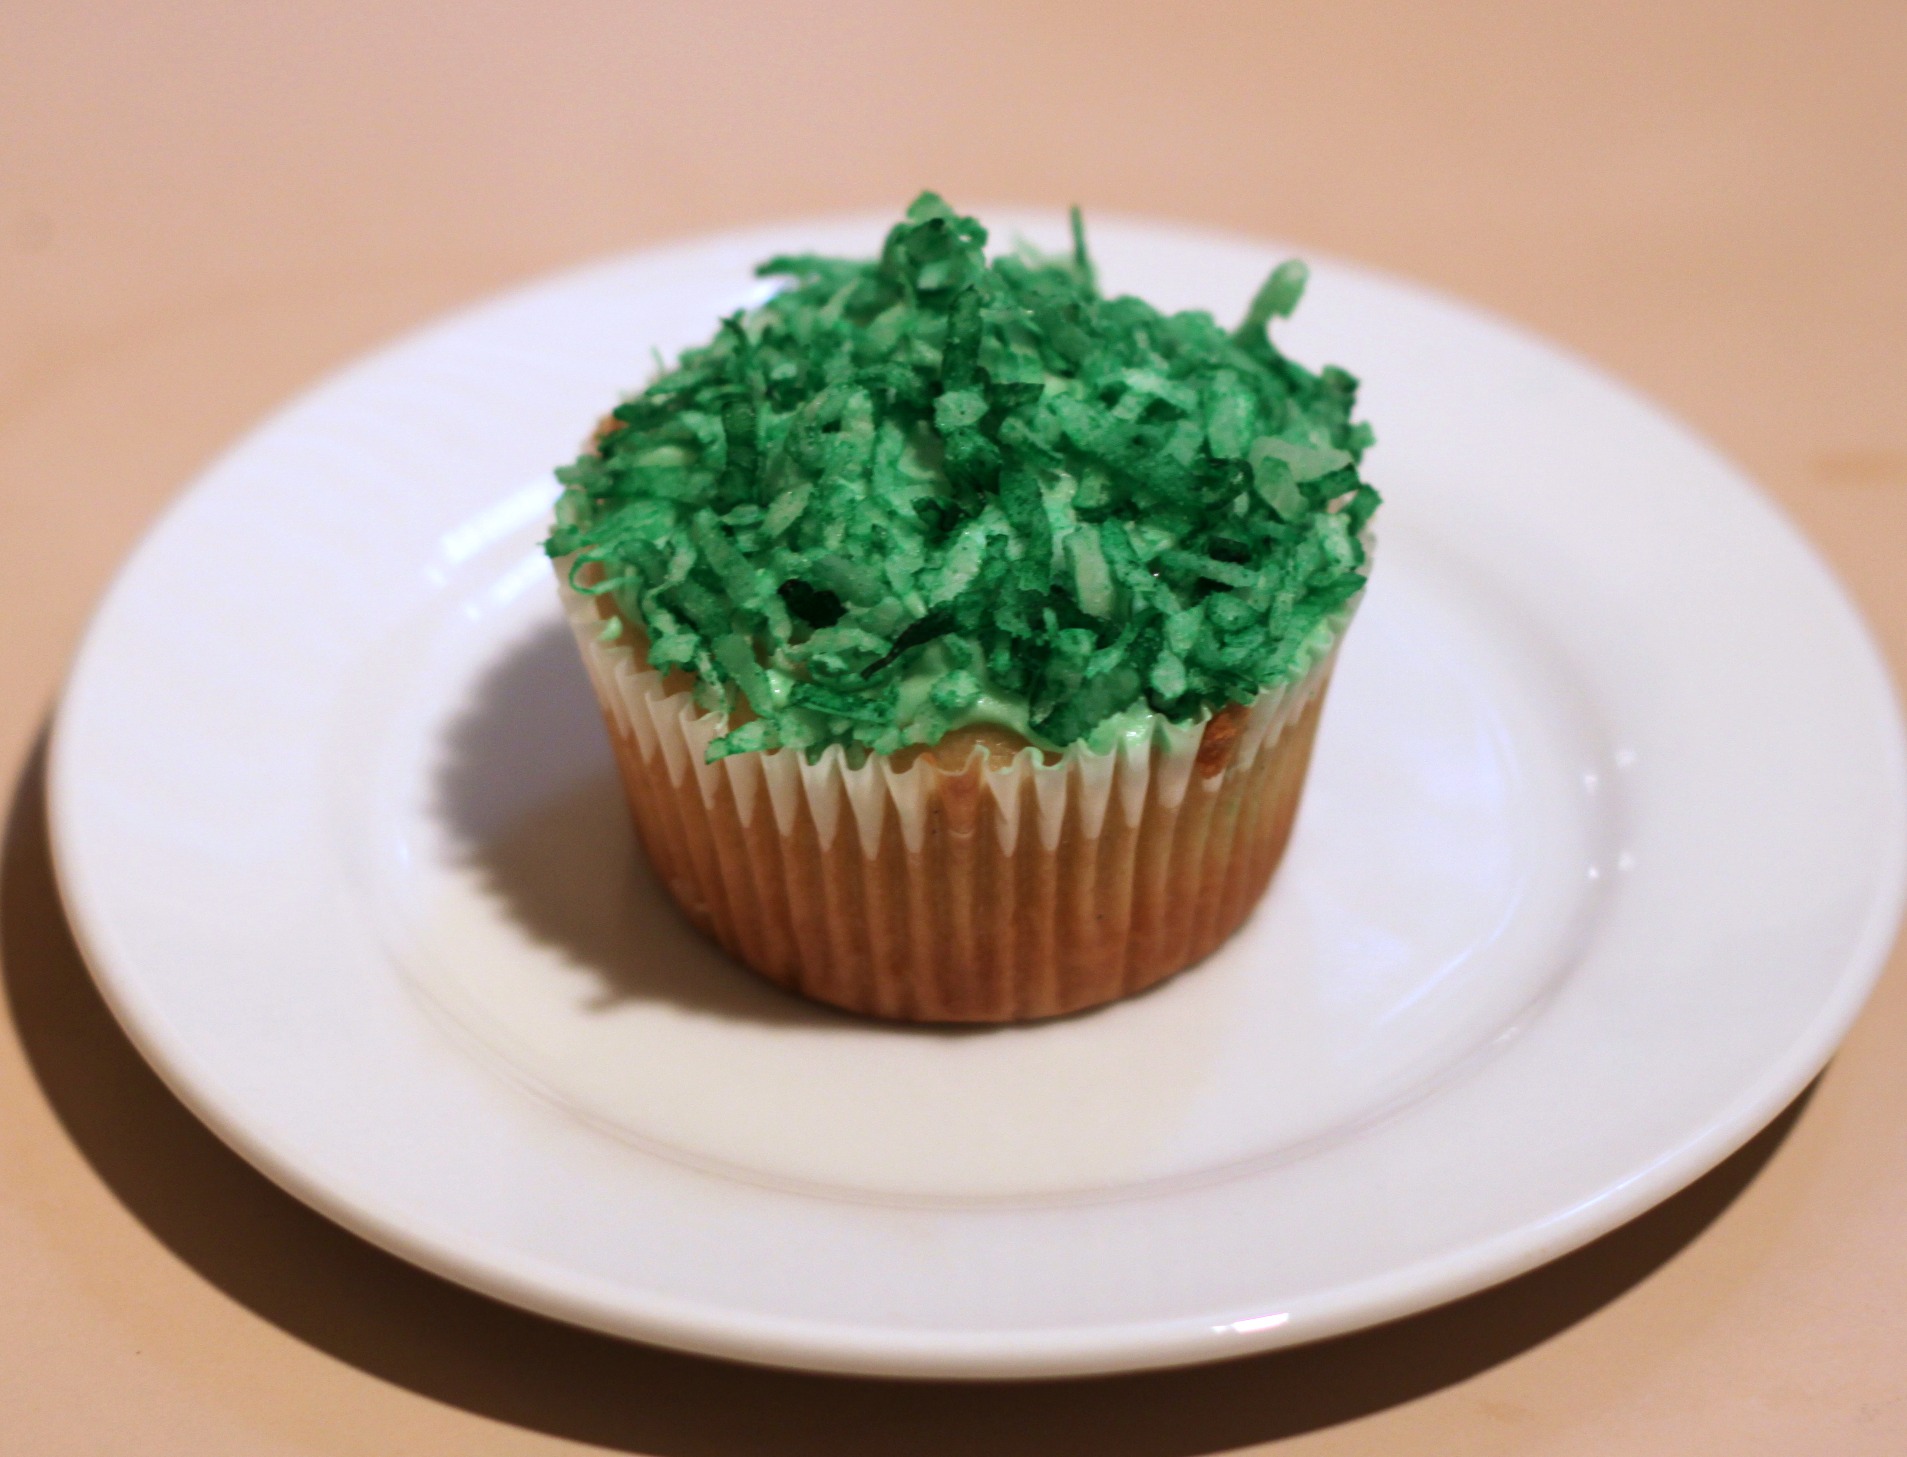 Put green coconut on cupcake